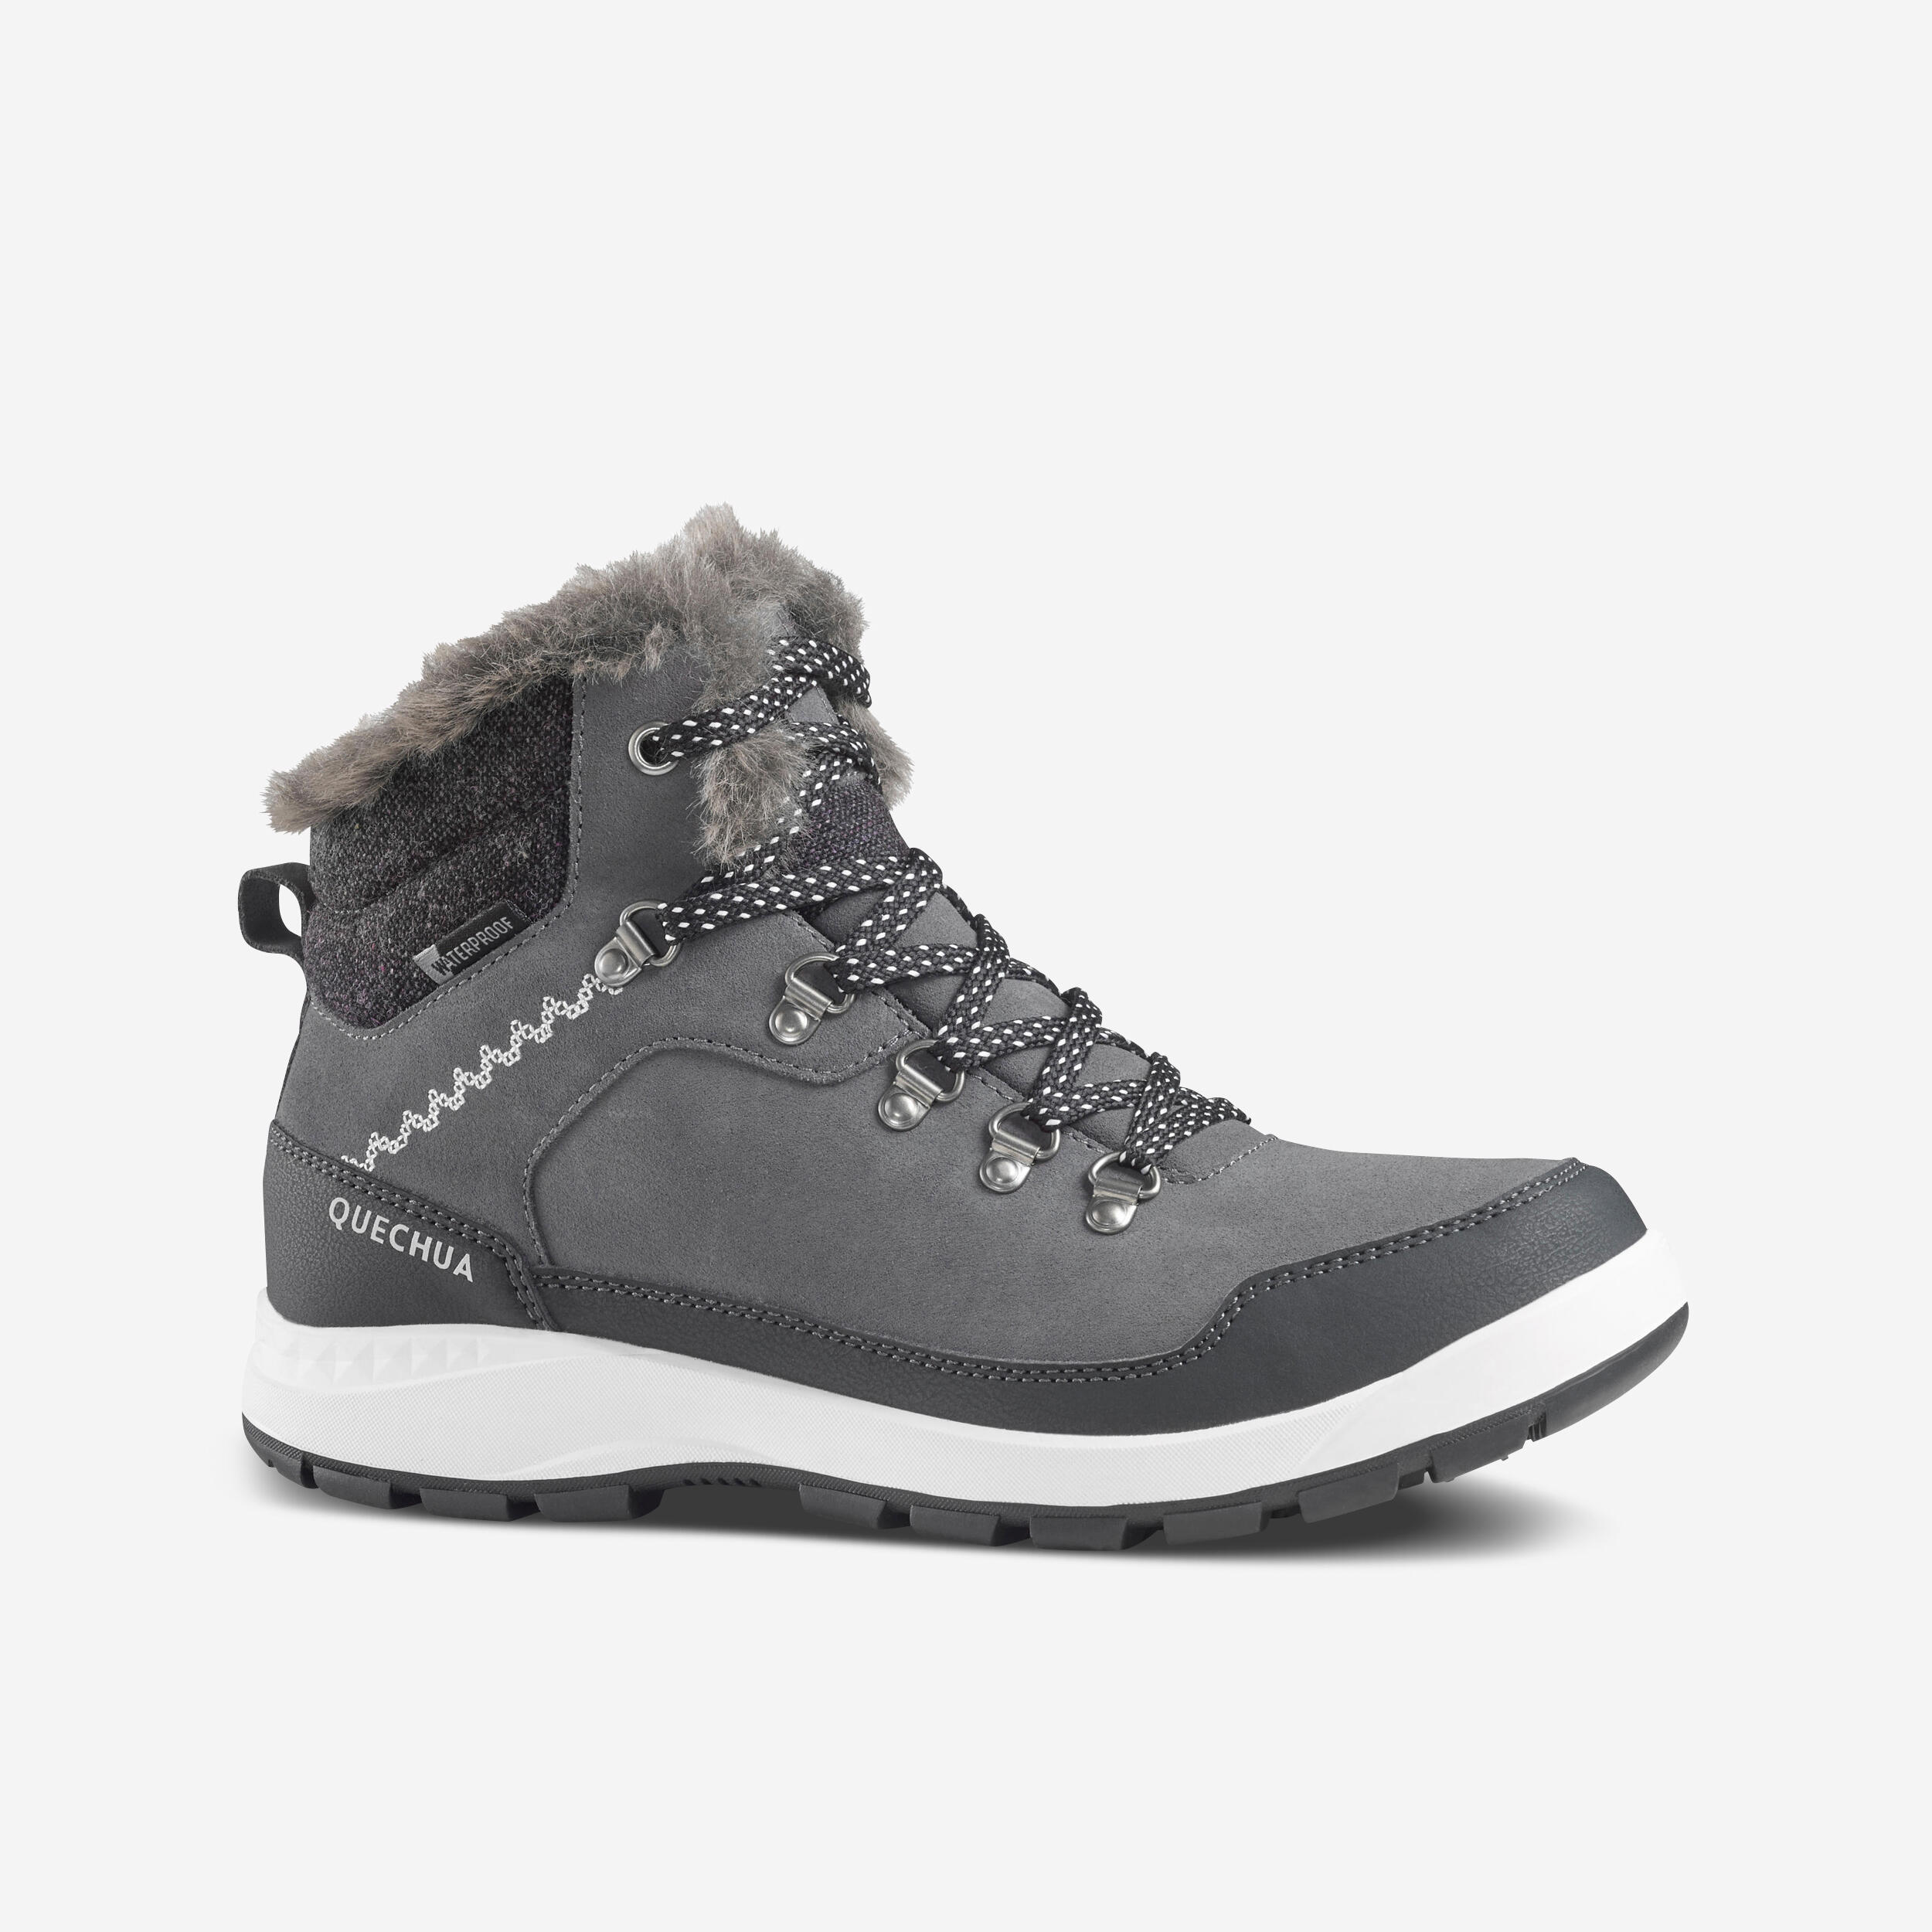 Women’s leather warm waterproof snow boots - SH900 Mid 1/7